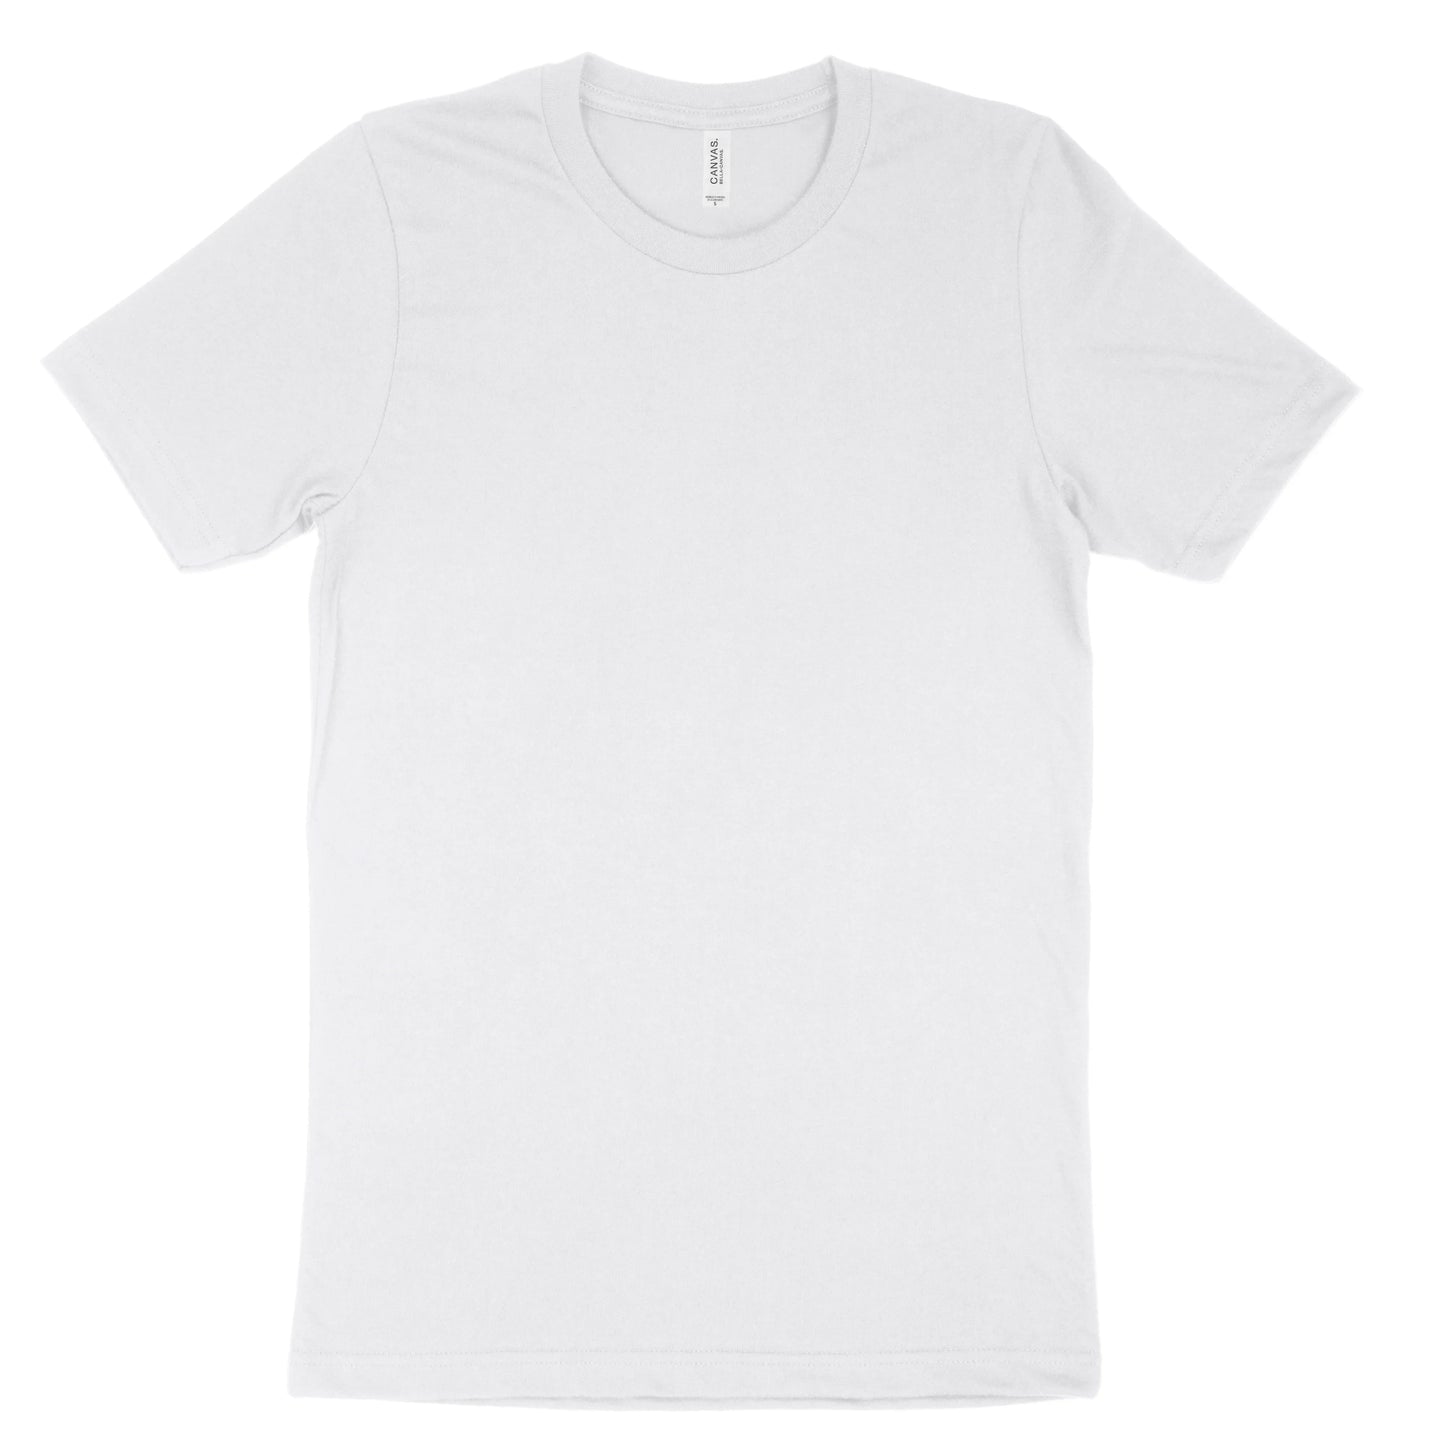 Configure my custom t-shirt for ActBlue - Star Line